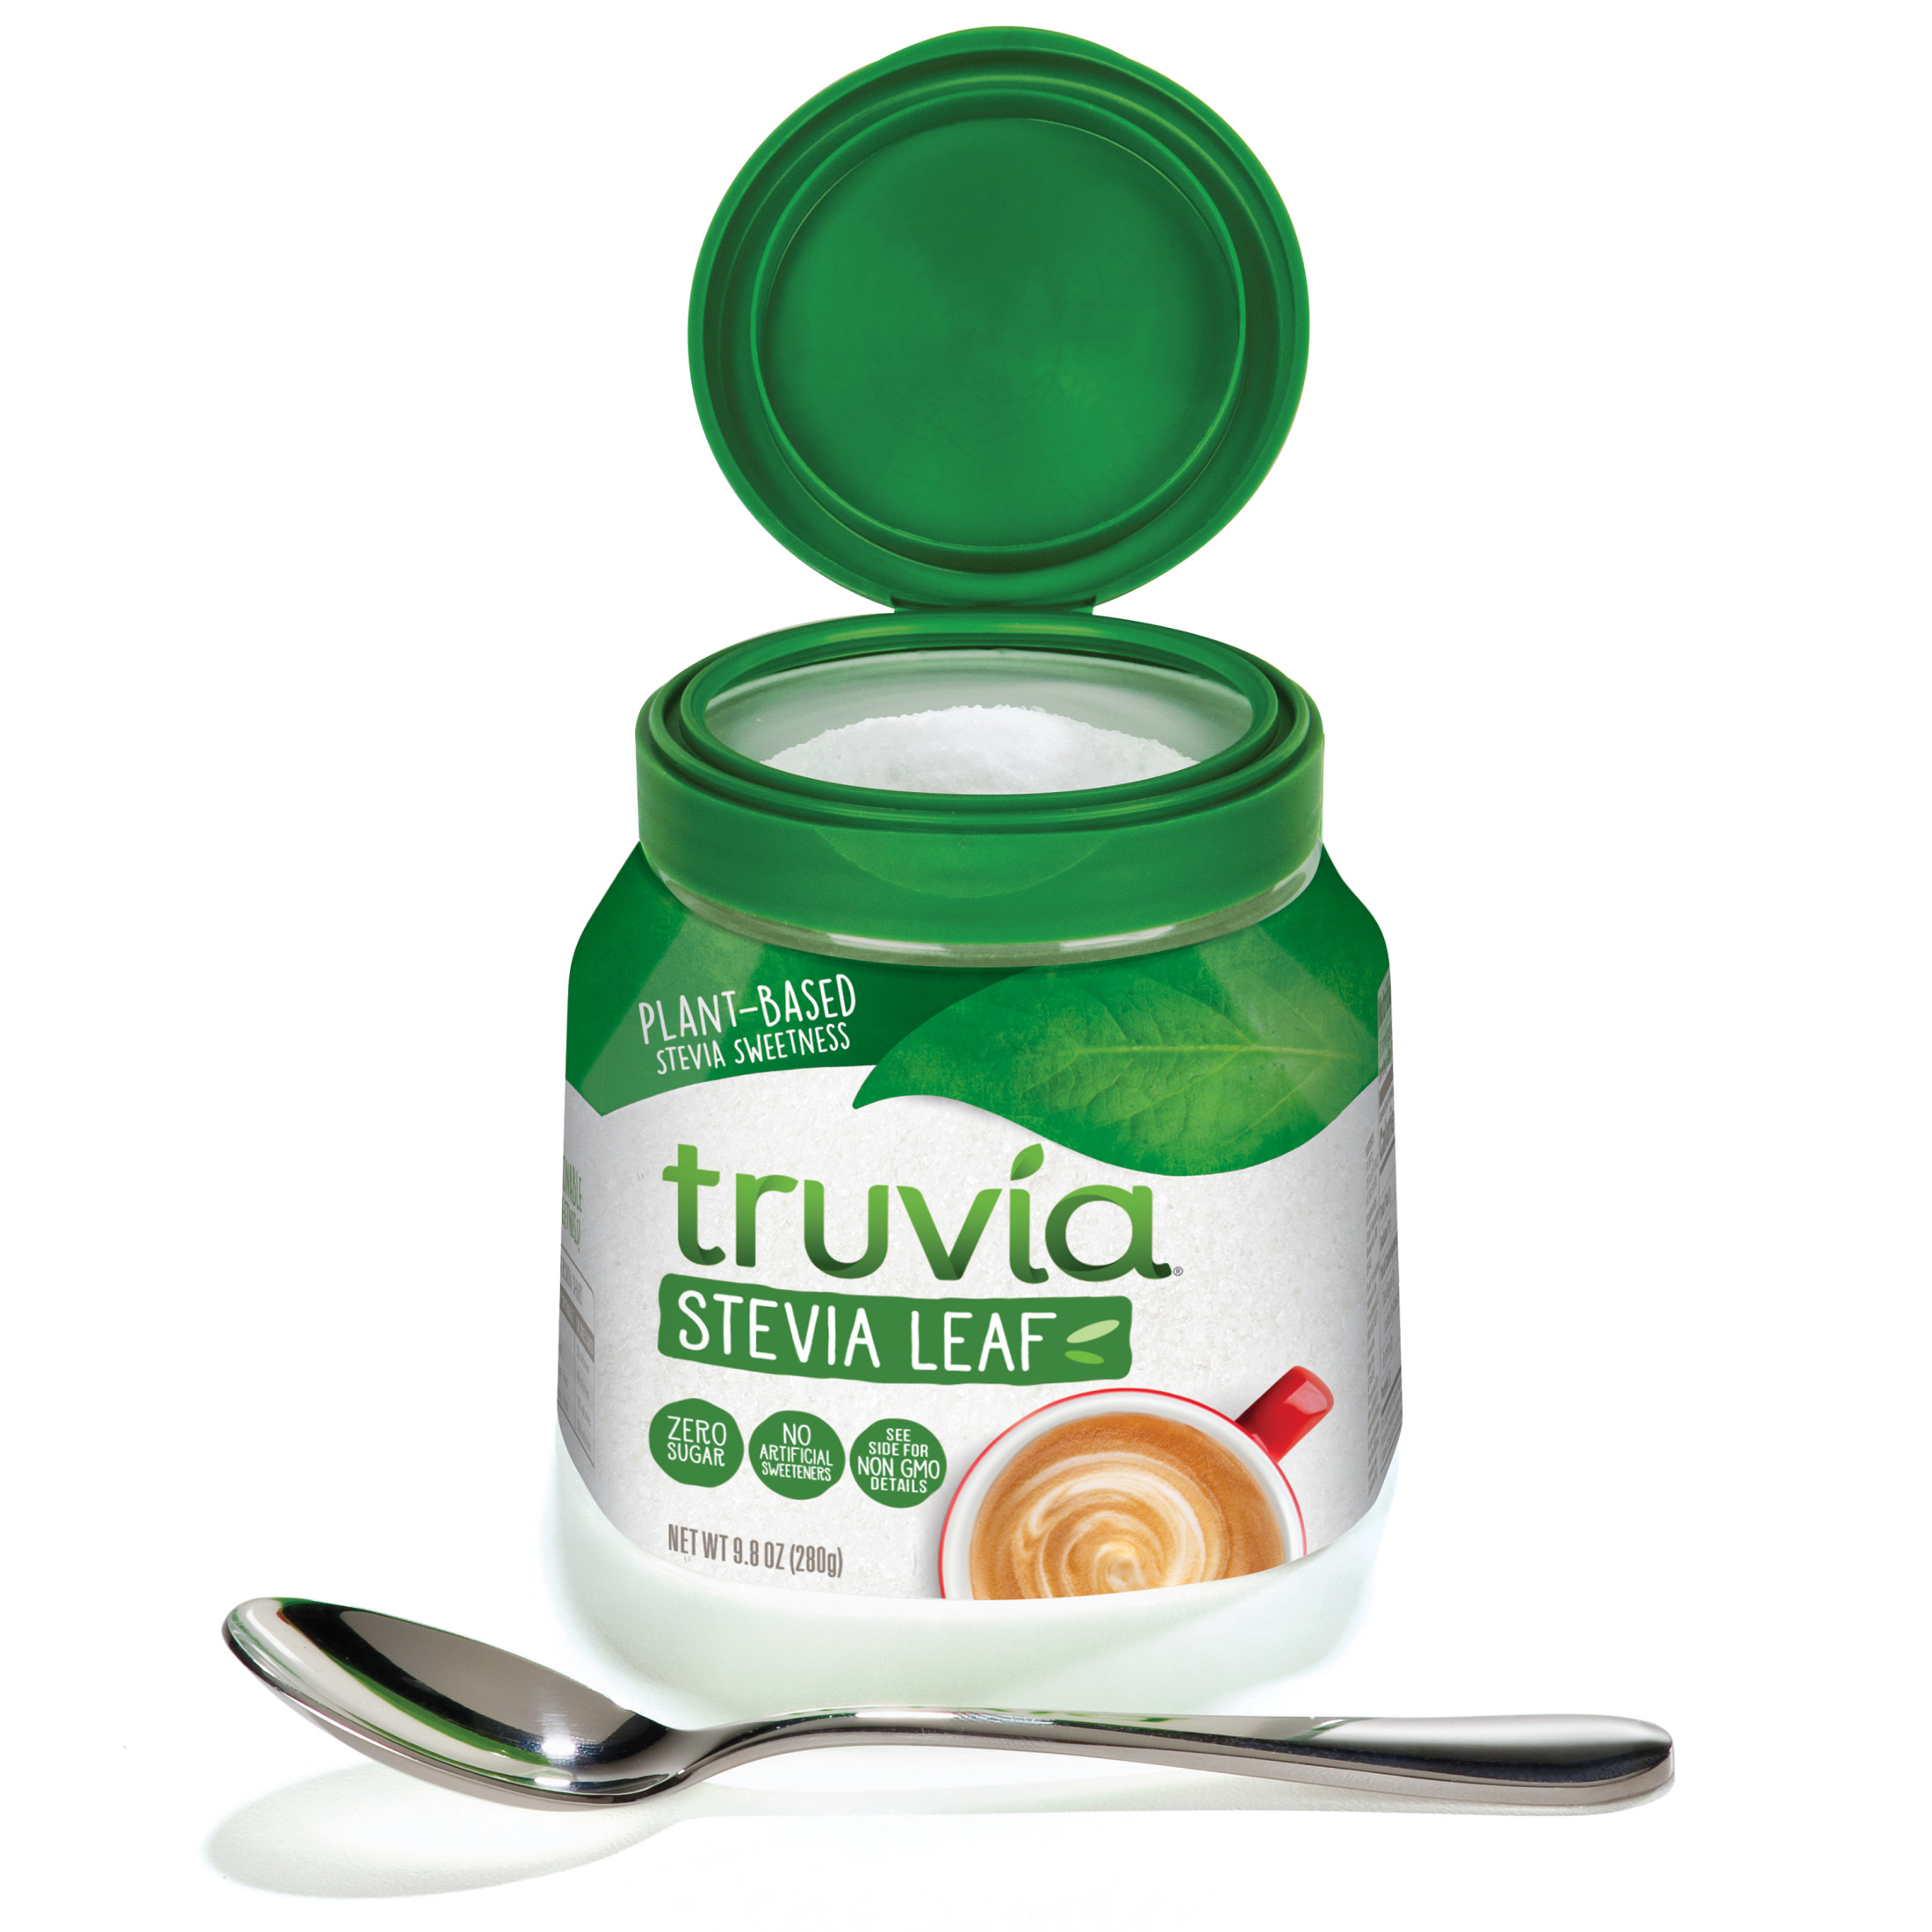 Truvia Calorie-Free Sweetener Jar from the Stevia Leaf (9.8 oz Jar) - image 5 of 7